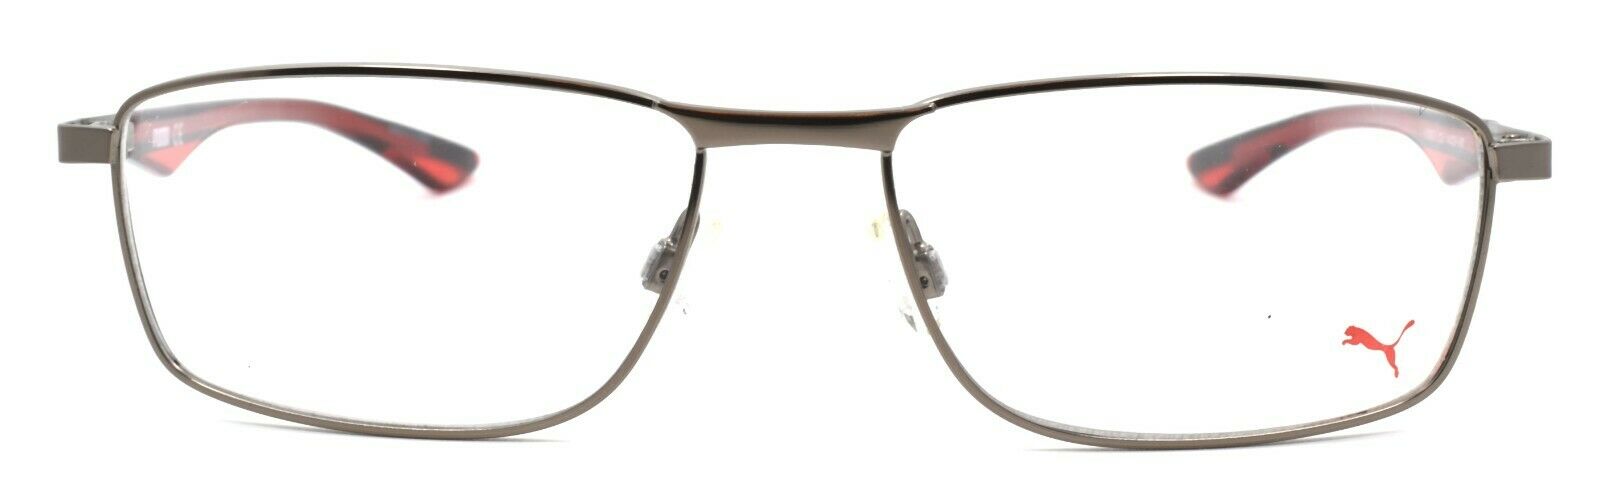 2-PUMA PU0065O 002 Men's Eyeglasses Frames 54-16-140 Ruthenium / Red + CASE-889652028248-IKSpecs